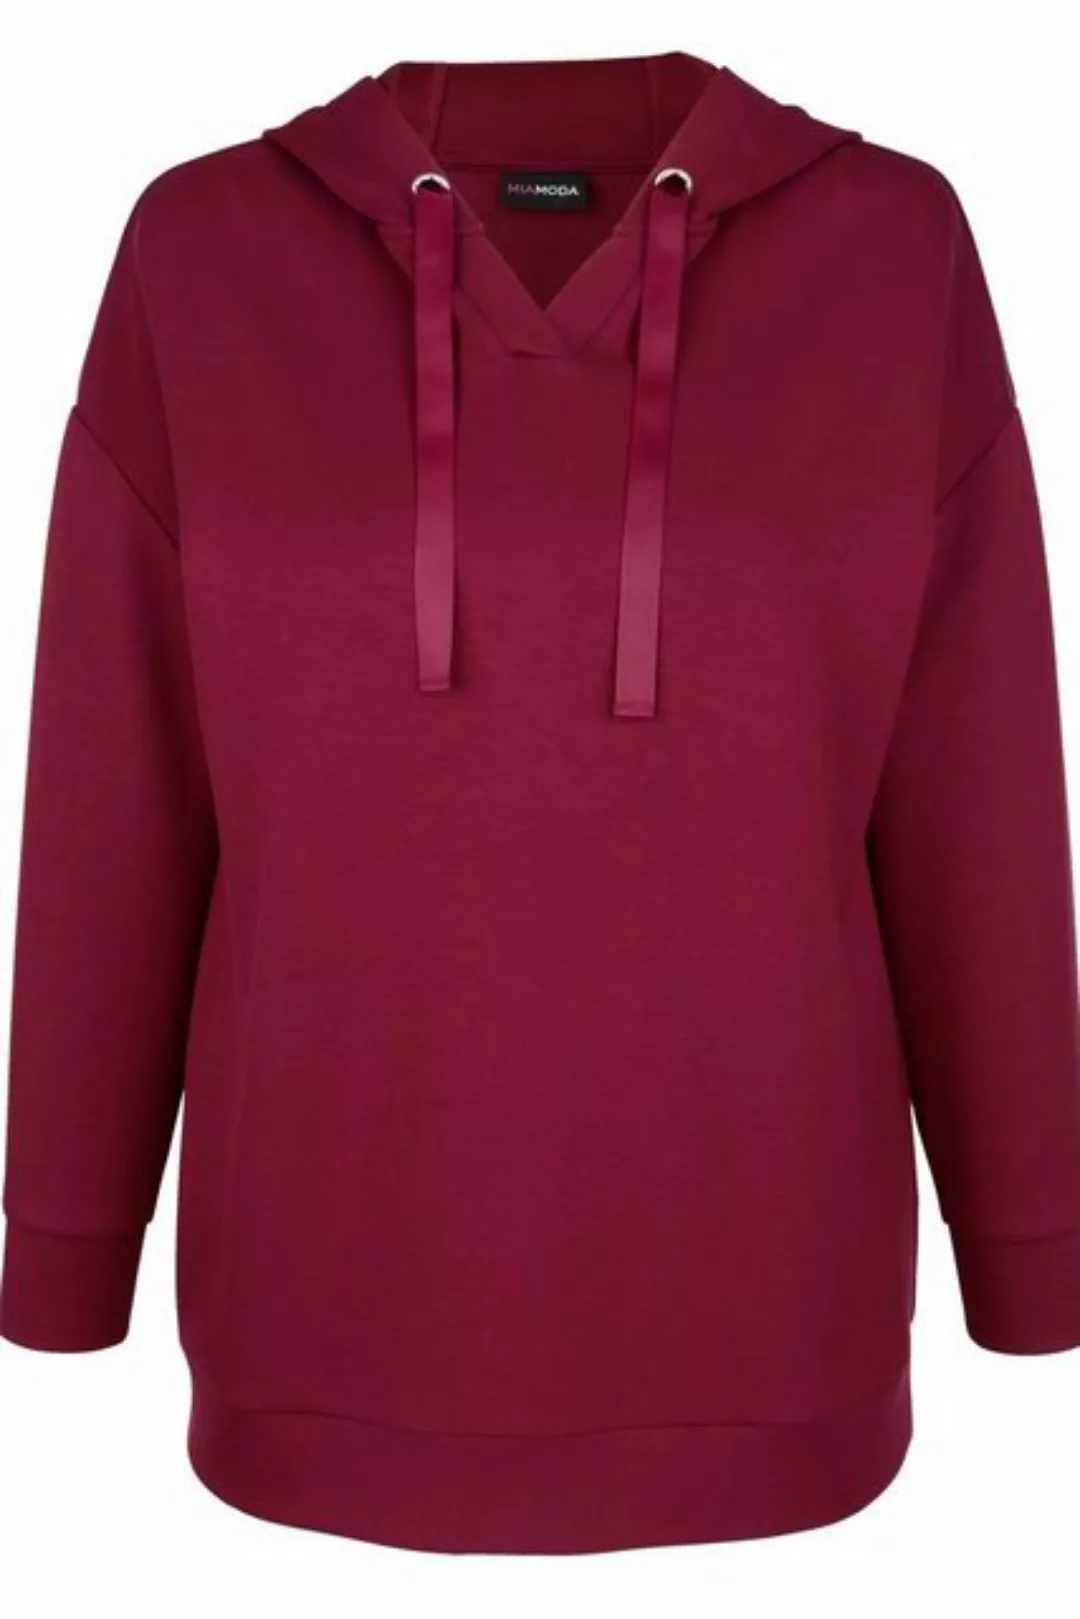 MIAMODA Sweatshirt Hoodie Kapuzensweater Langarm günstig online kaufen